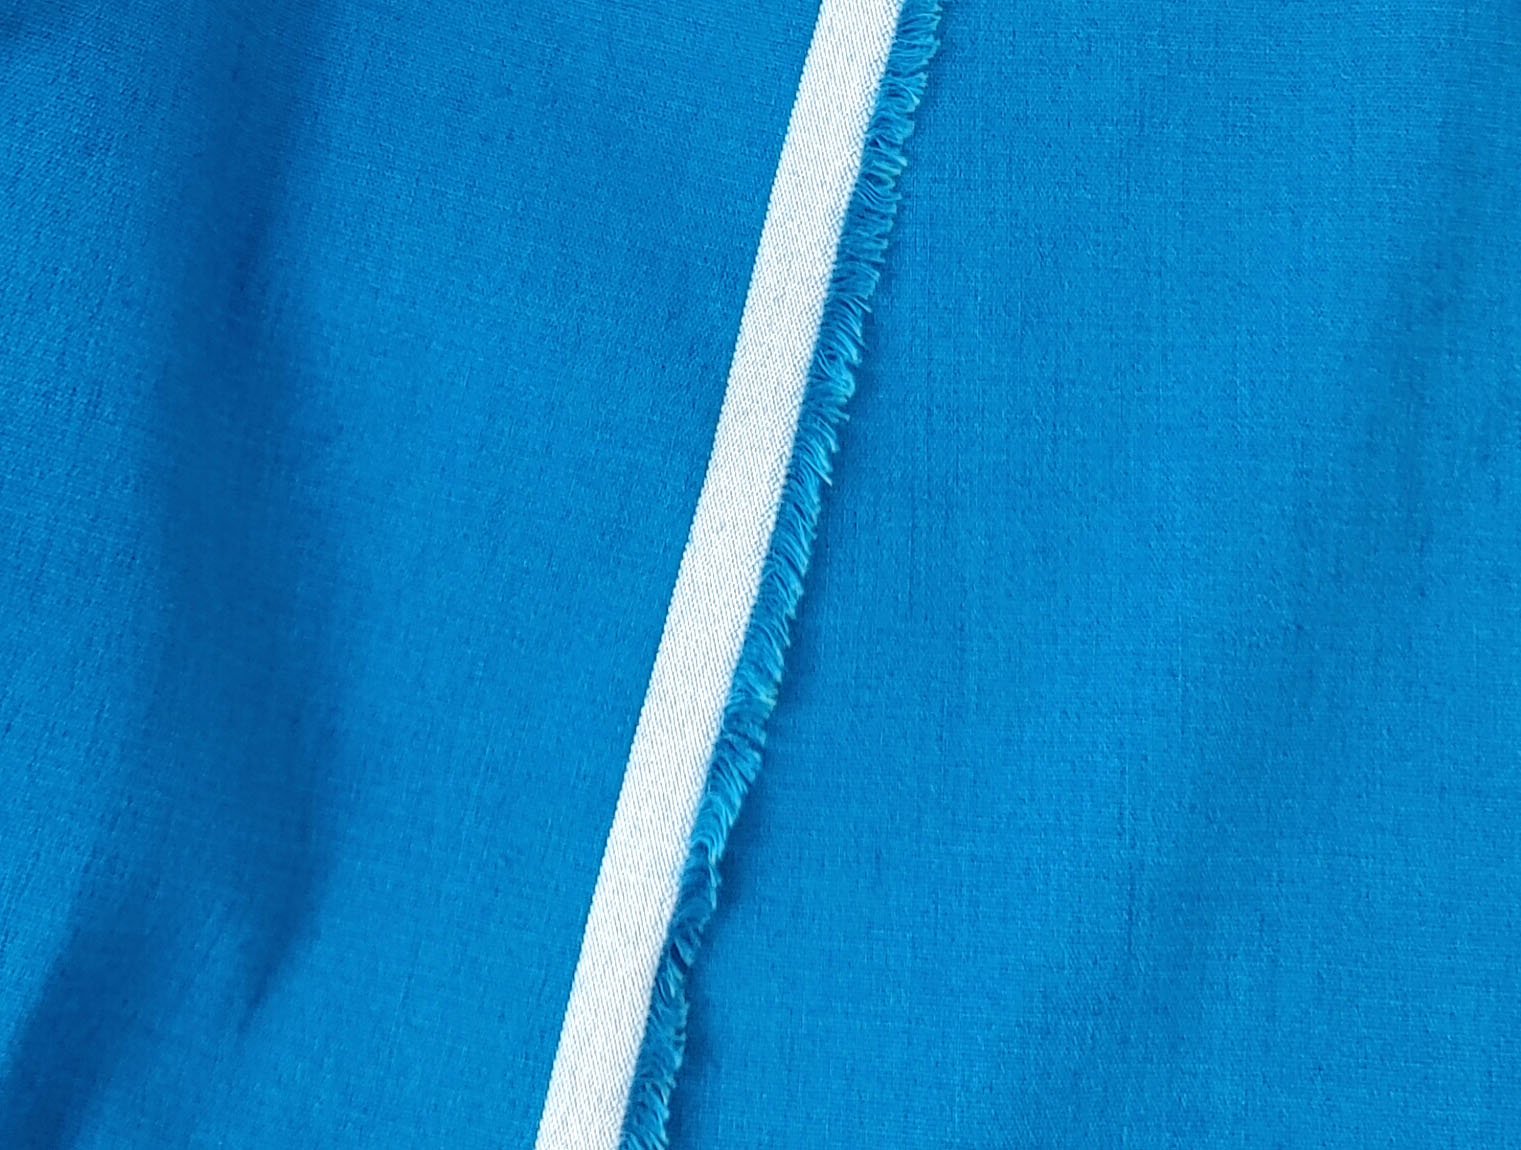 Donna Linen - High Density Linen Rayon Stretch Fabric 4025 4024 5982 4803 4579 4578 4023 3978 - The Linen Lab - Blue(Dark)